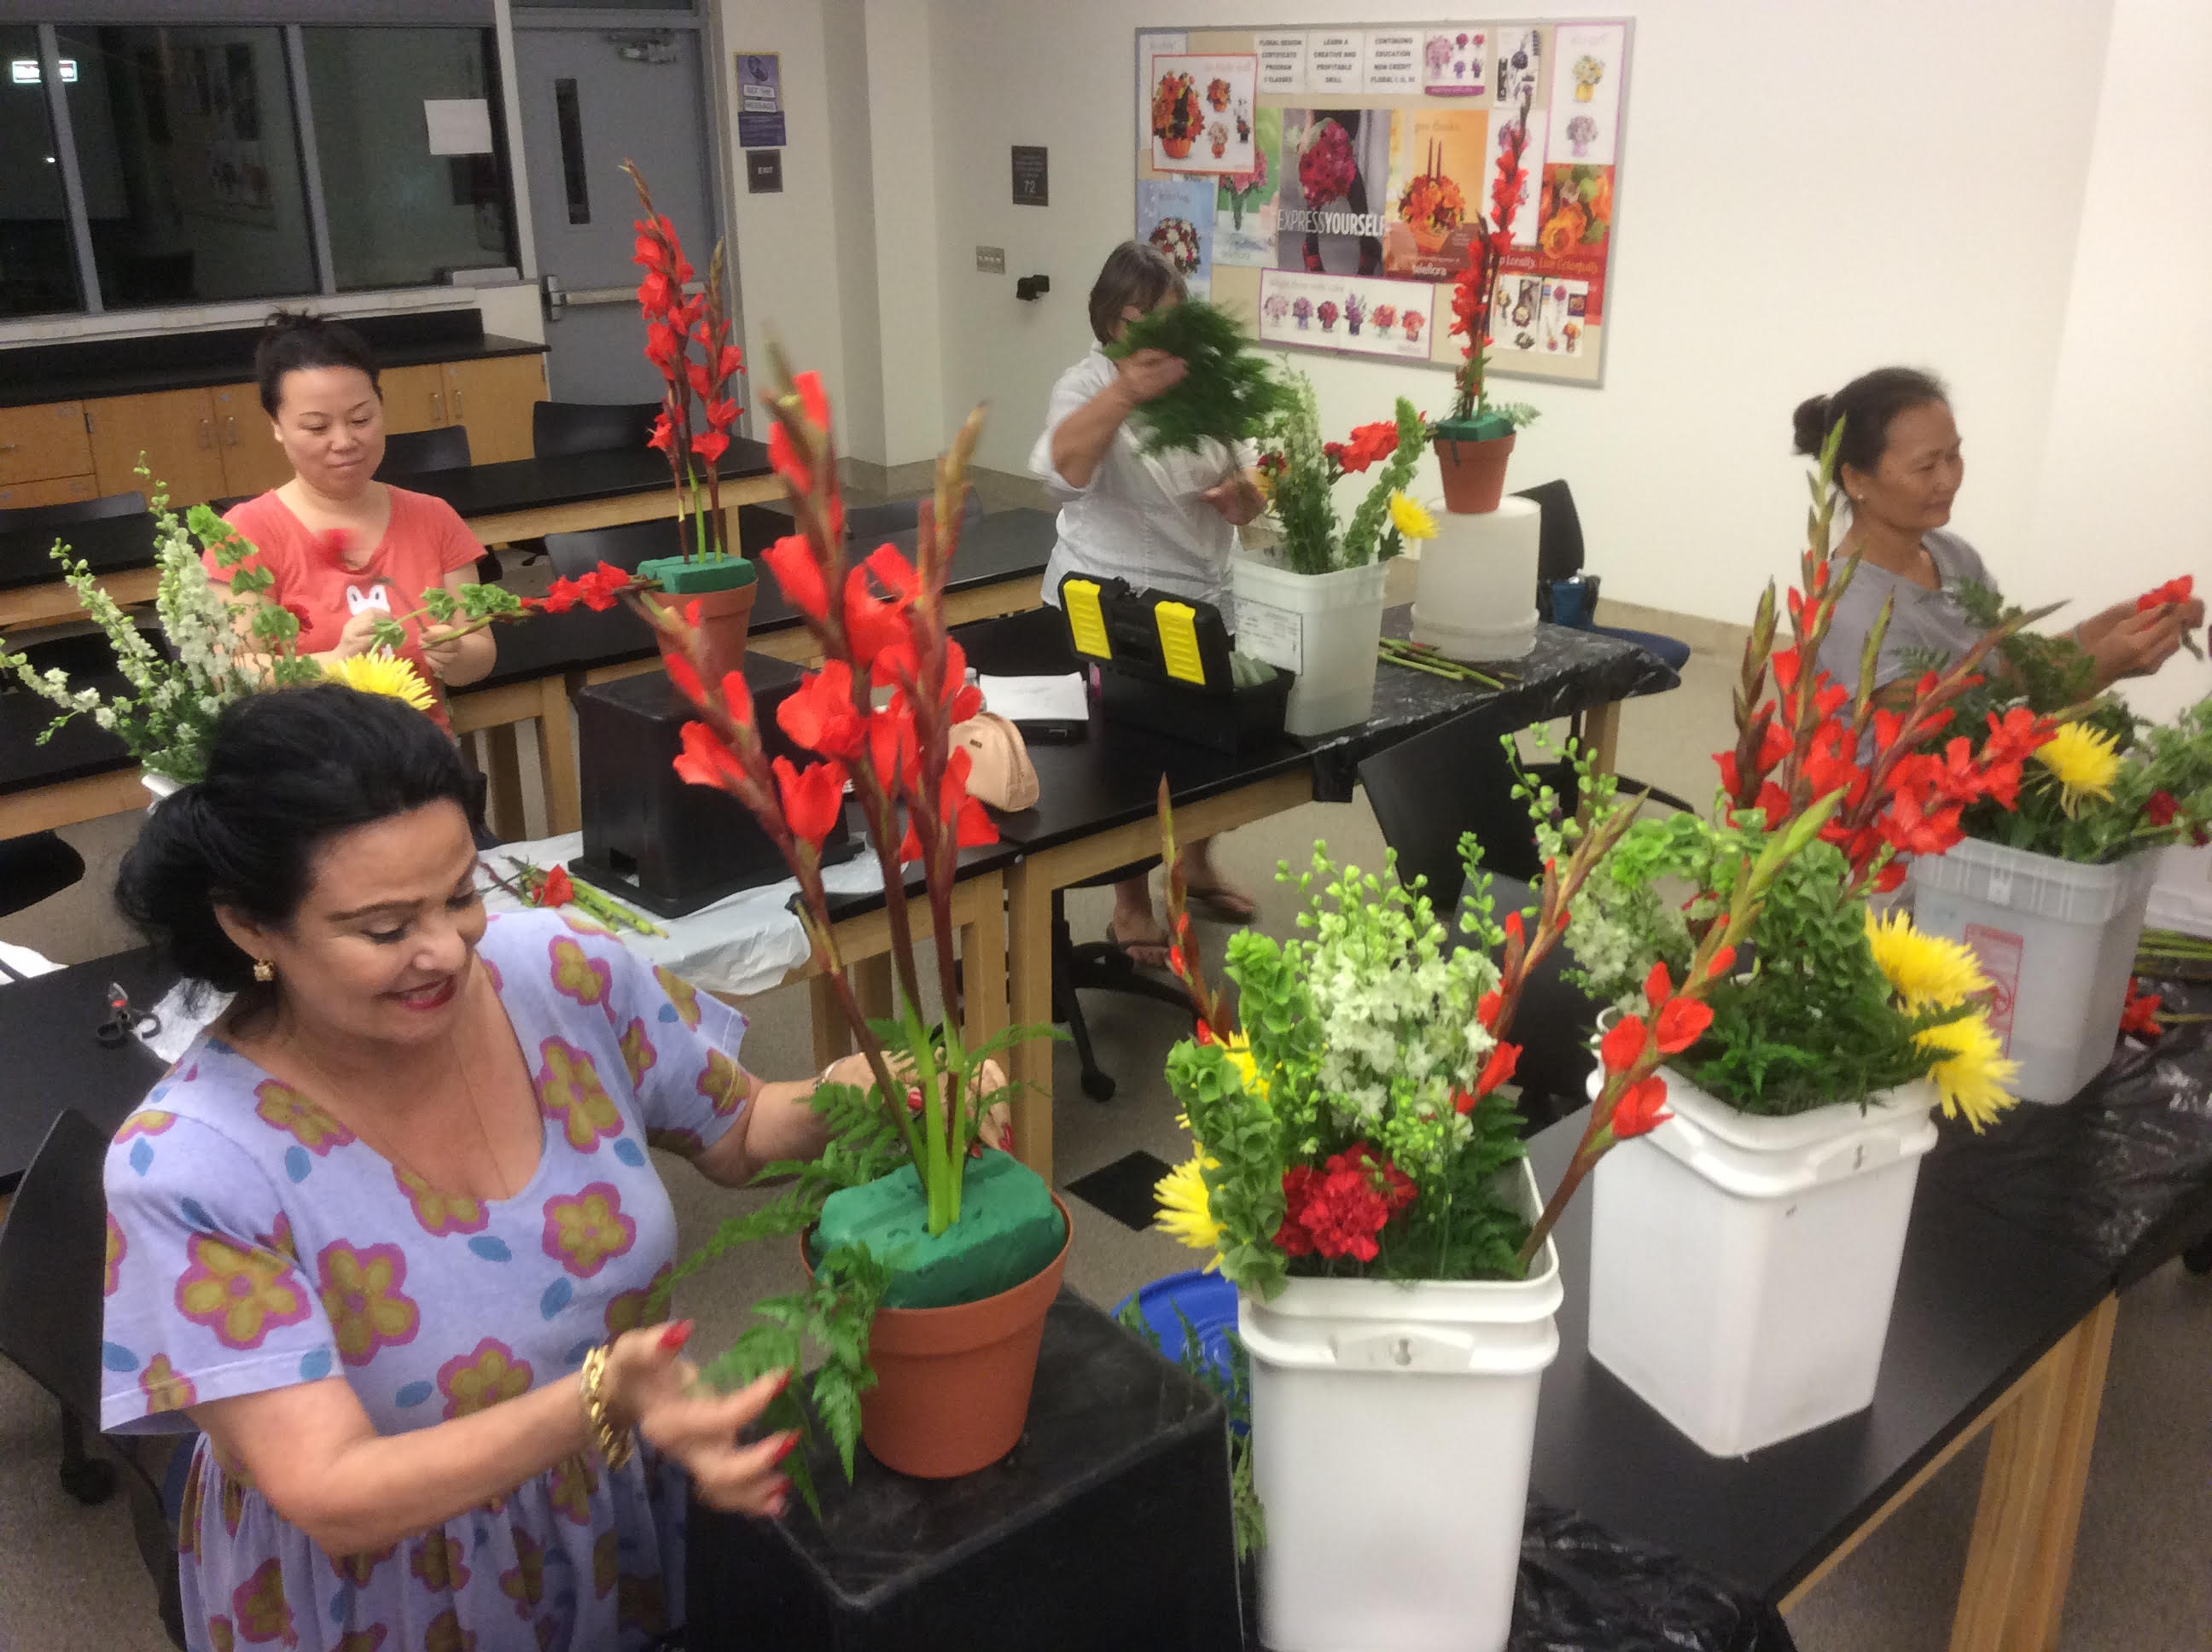 Students creating floral arrangements 